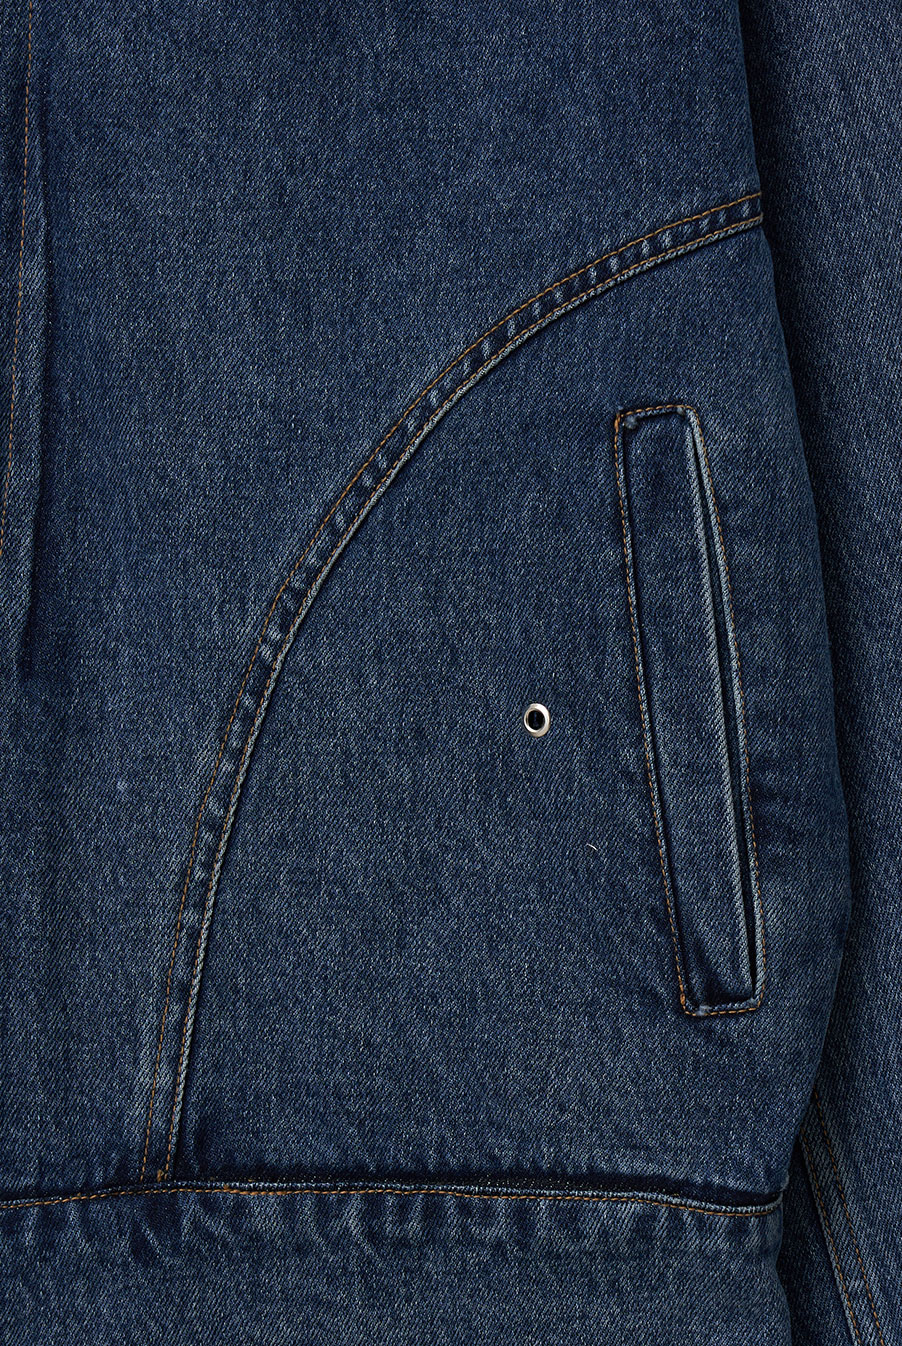 Bulky zipper denim Jacket - Deep blue